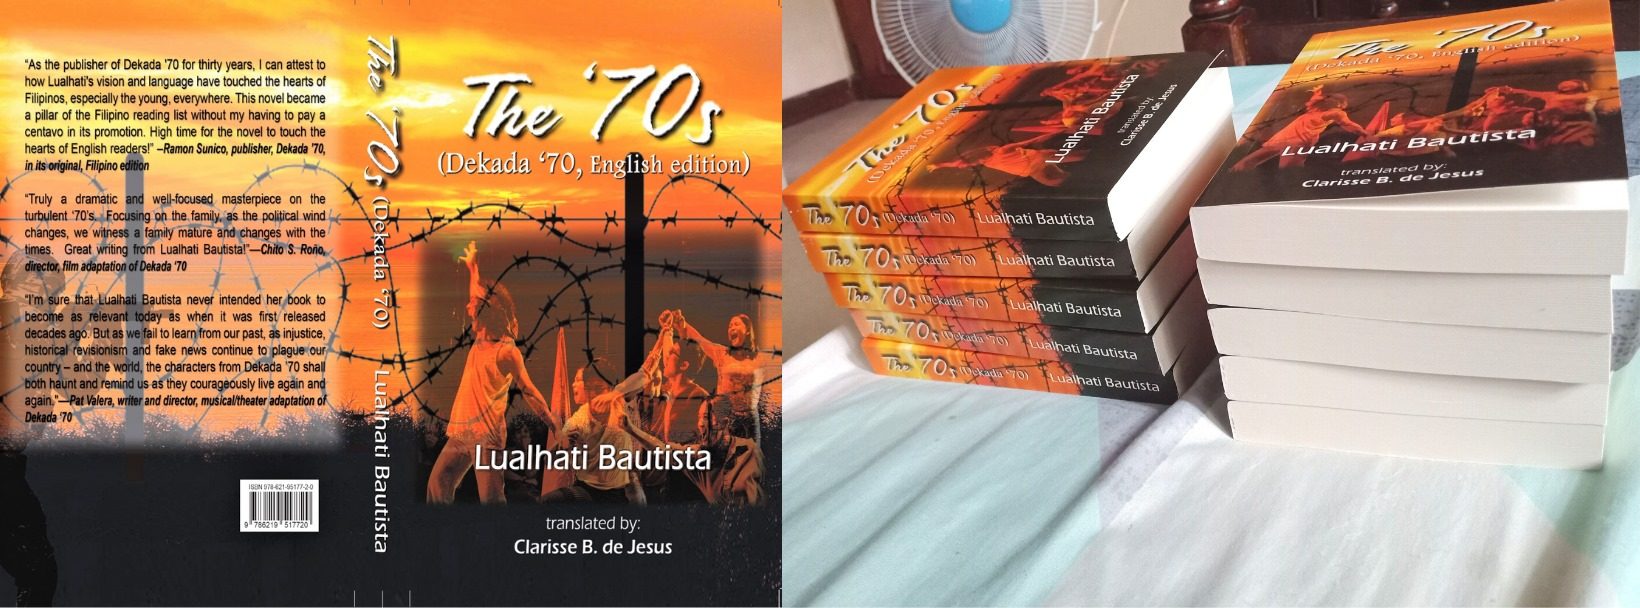 Lualhati Bautista gets offer from Penguin to publish ‘Dekada ’70’